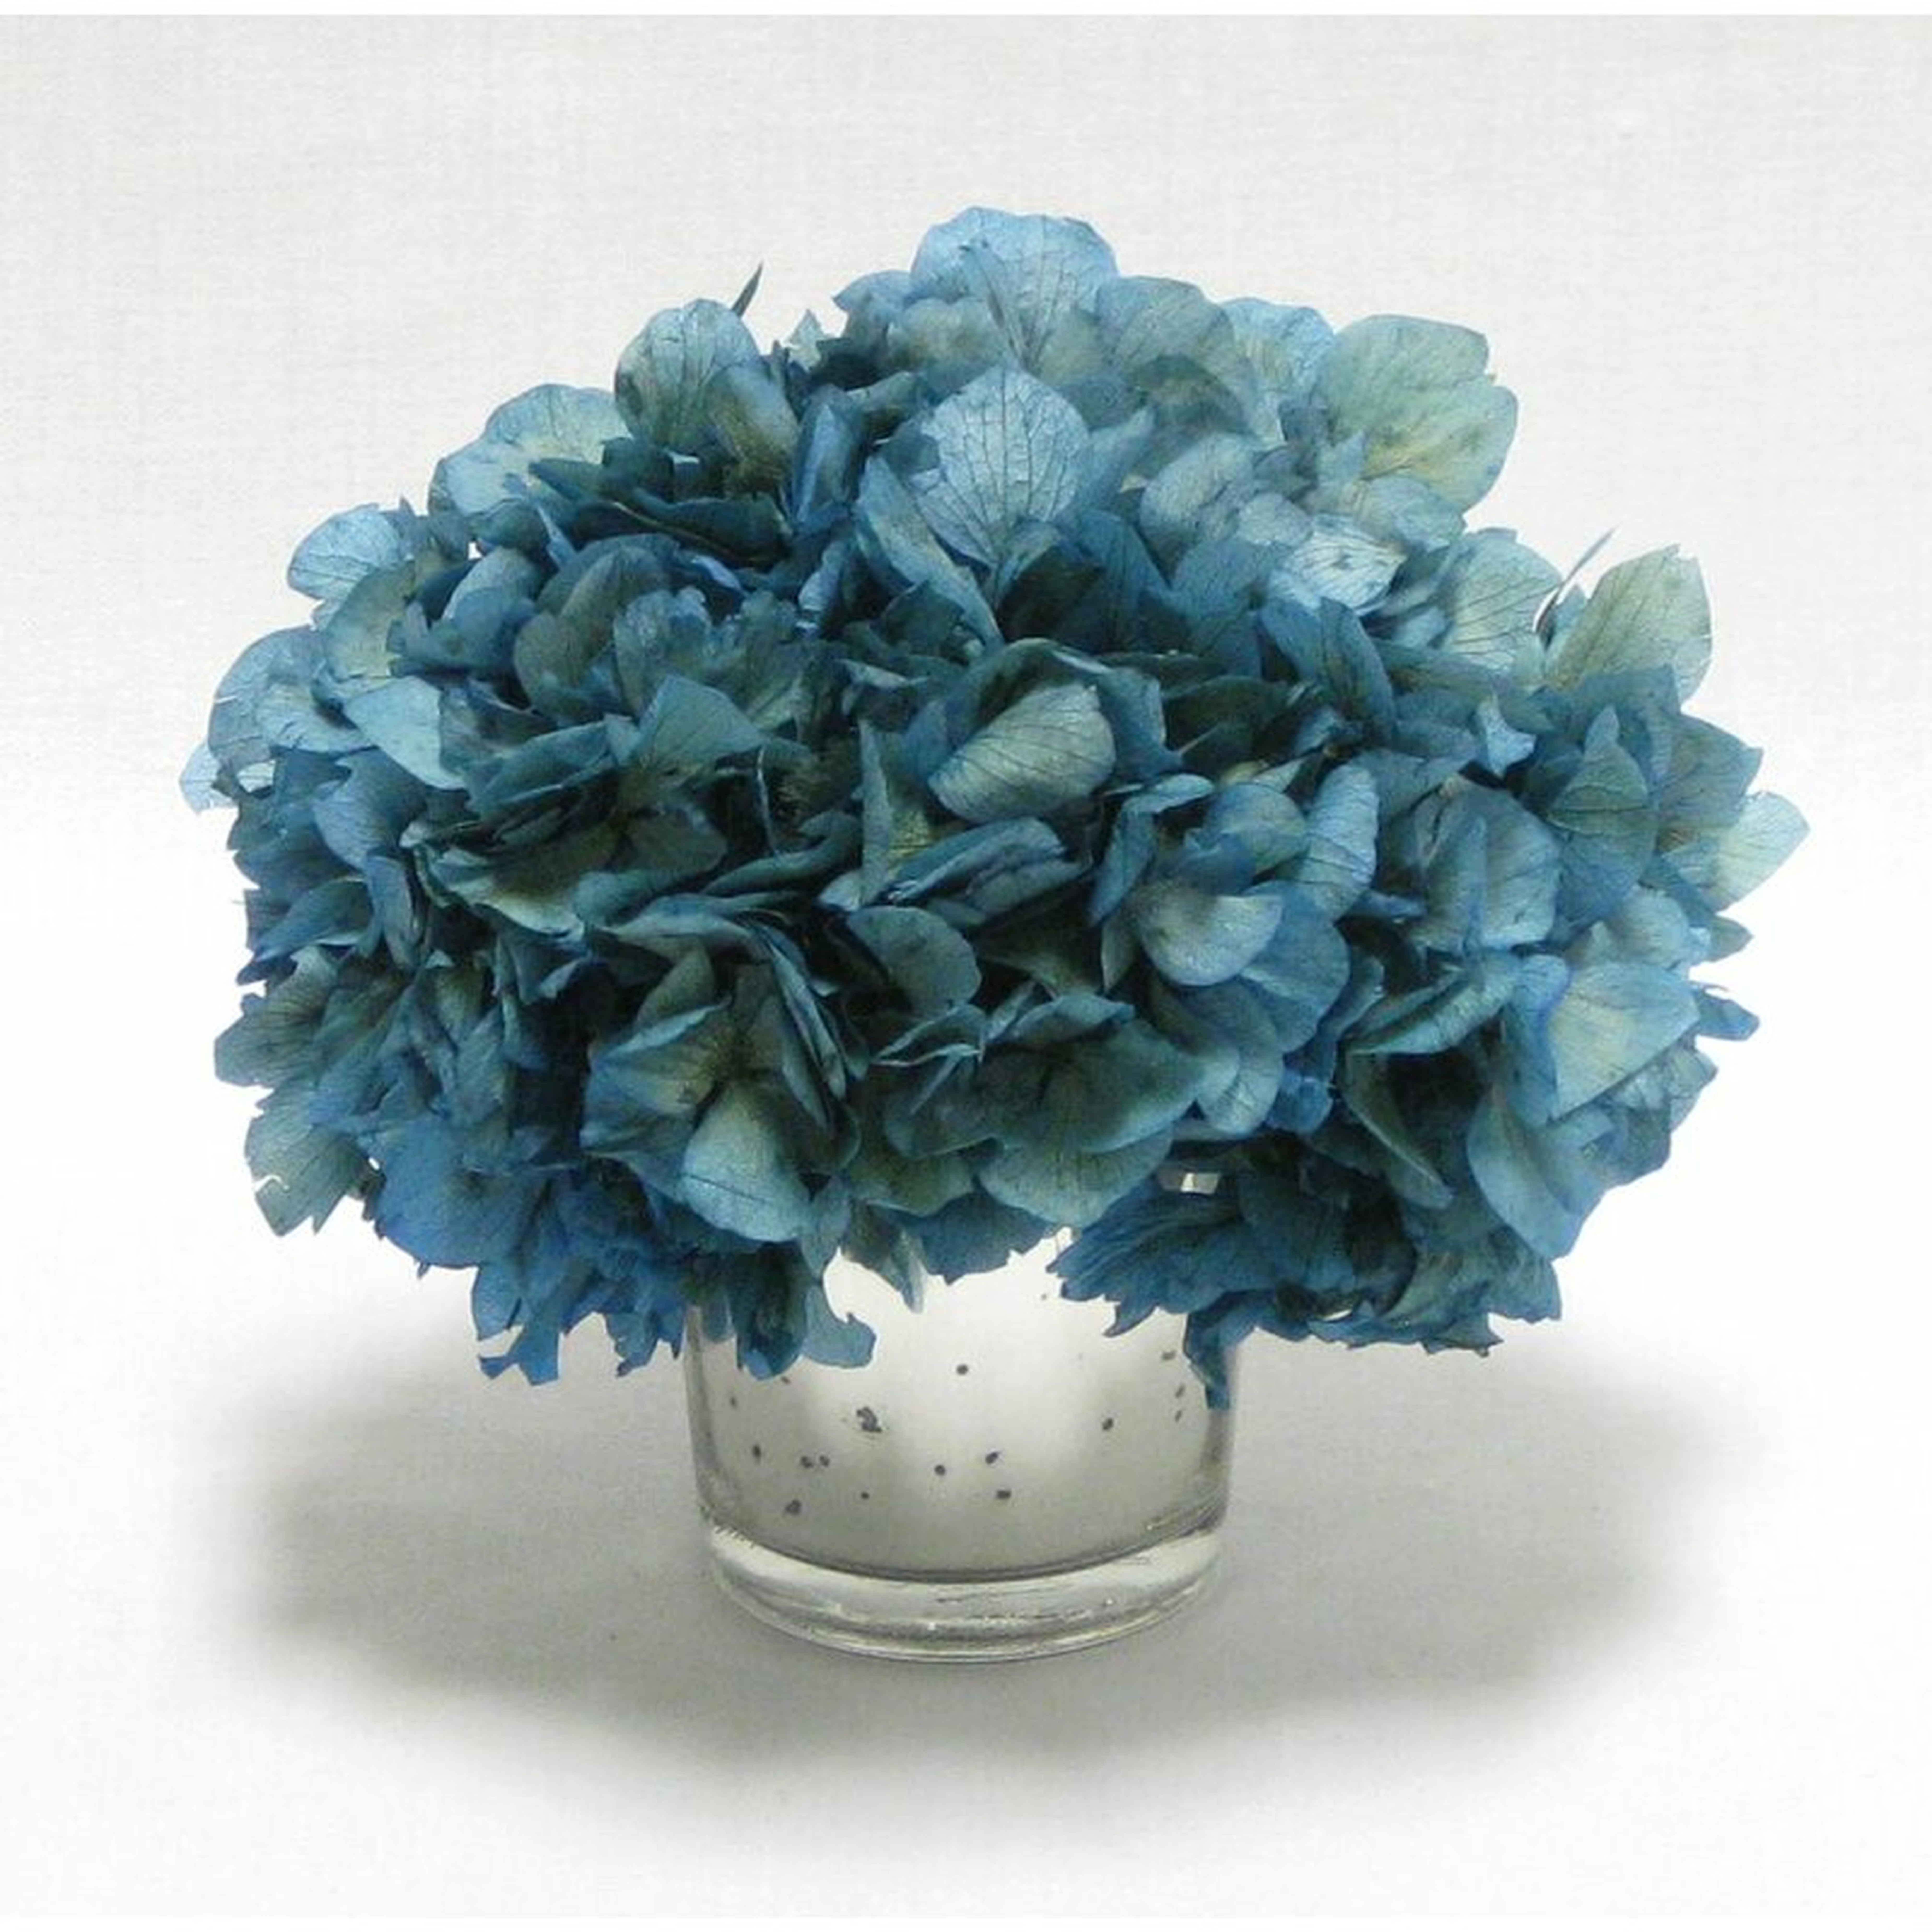 Mini Preserved Hydrangea Floral Arrangement in Vase Flower Color: Natural Blue/Light Blue - Perigold